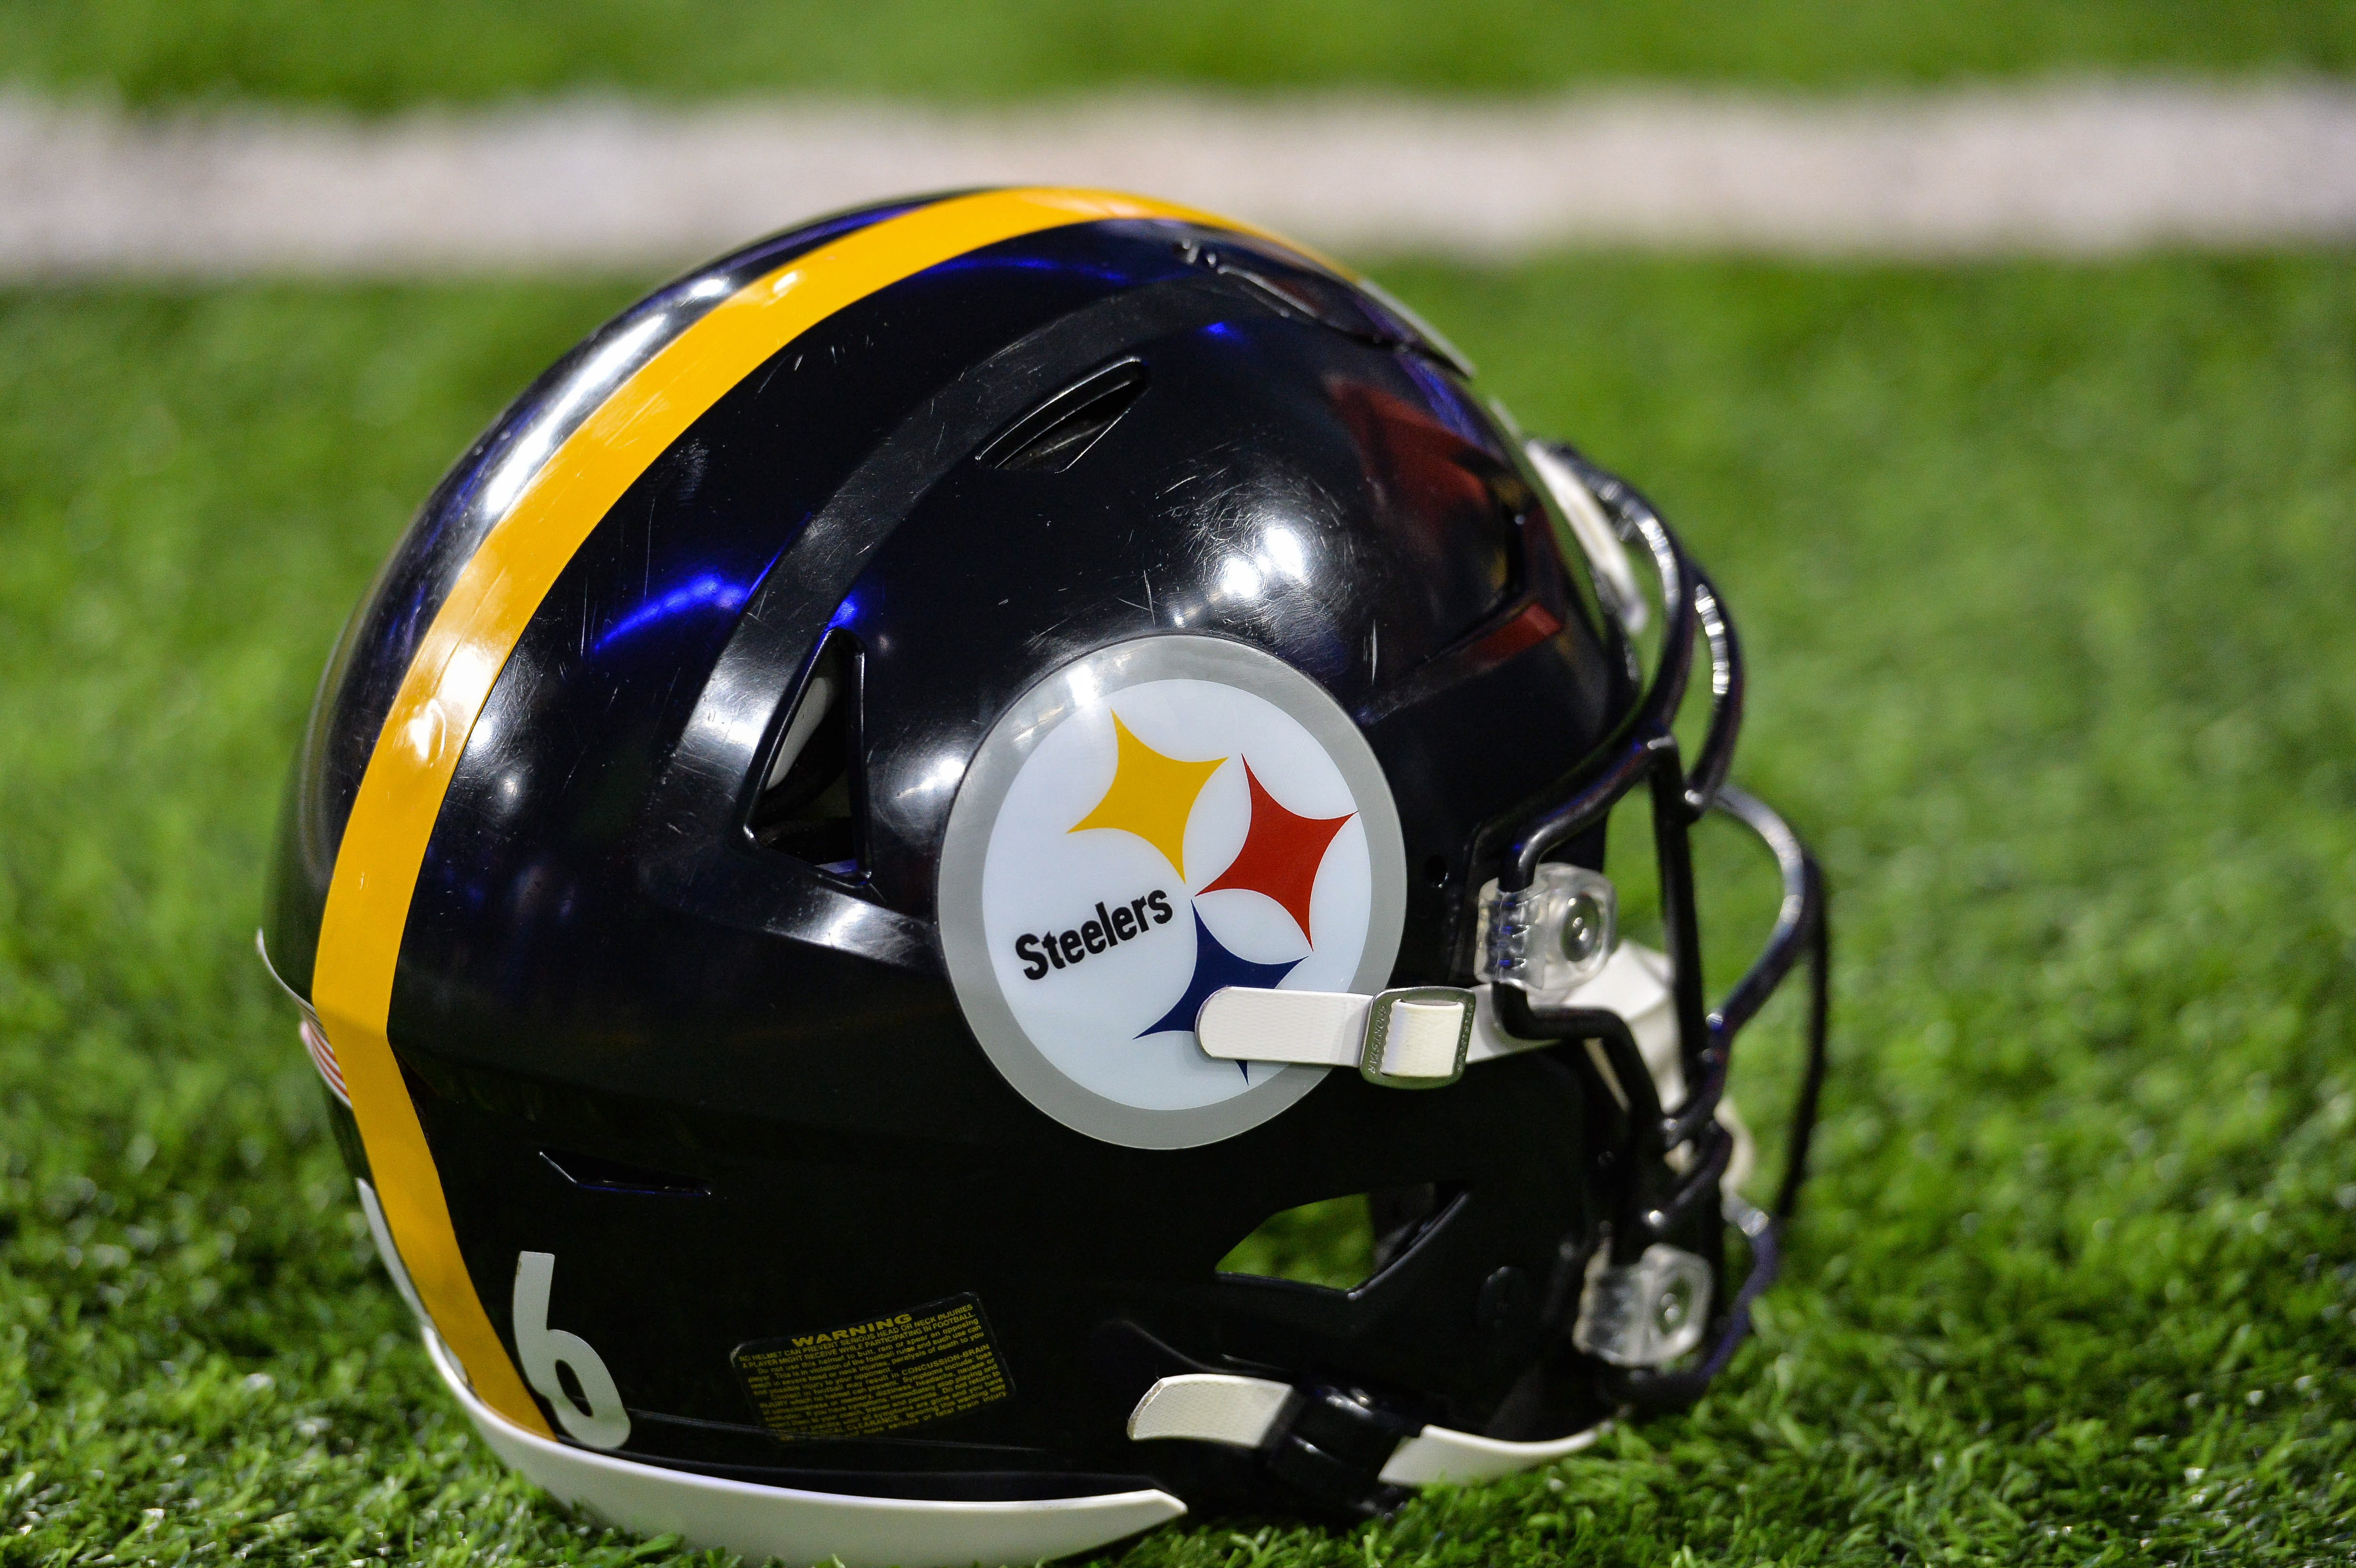 Minneapolis, Minnesota, USA; The Steelers logo on the helmet before the game between the Minnesota Vikings and the Pittsburgh Steelers at U.S. Bank Stadium.